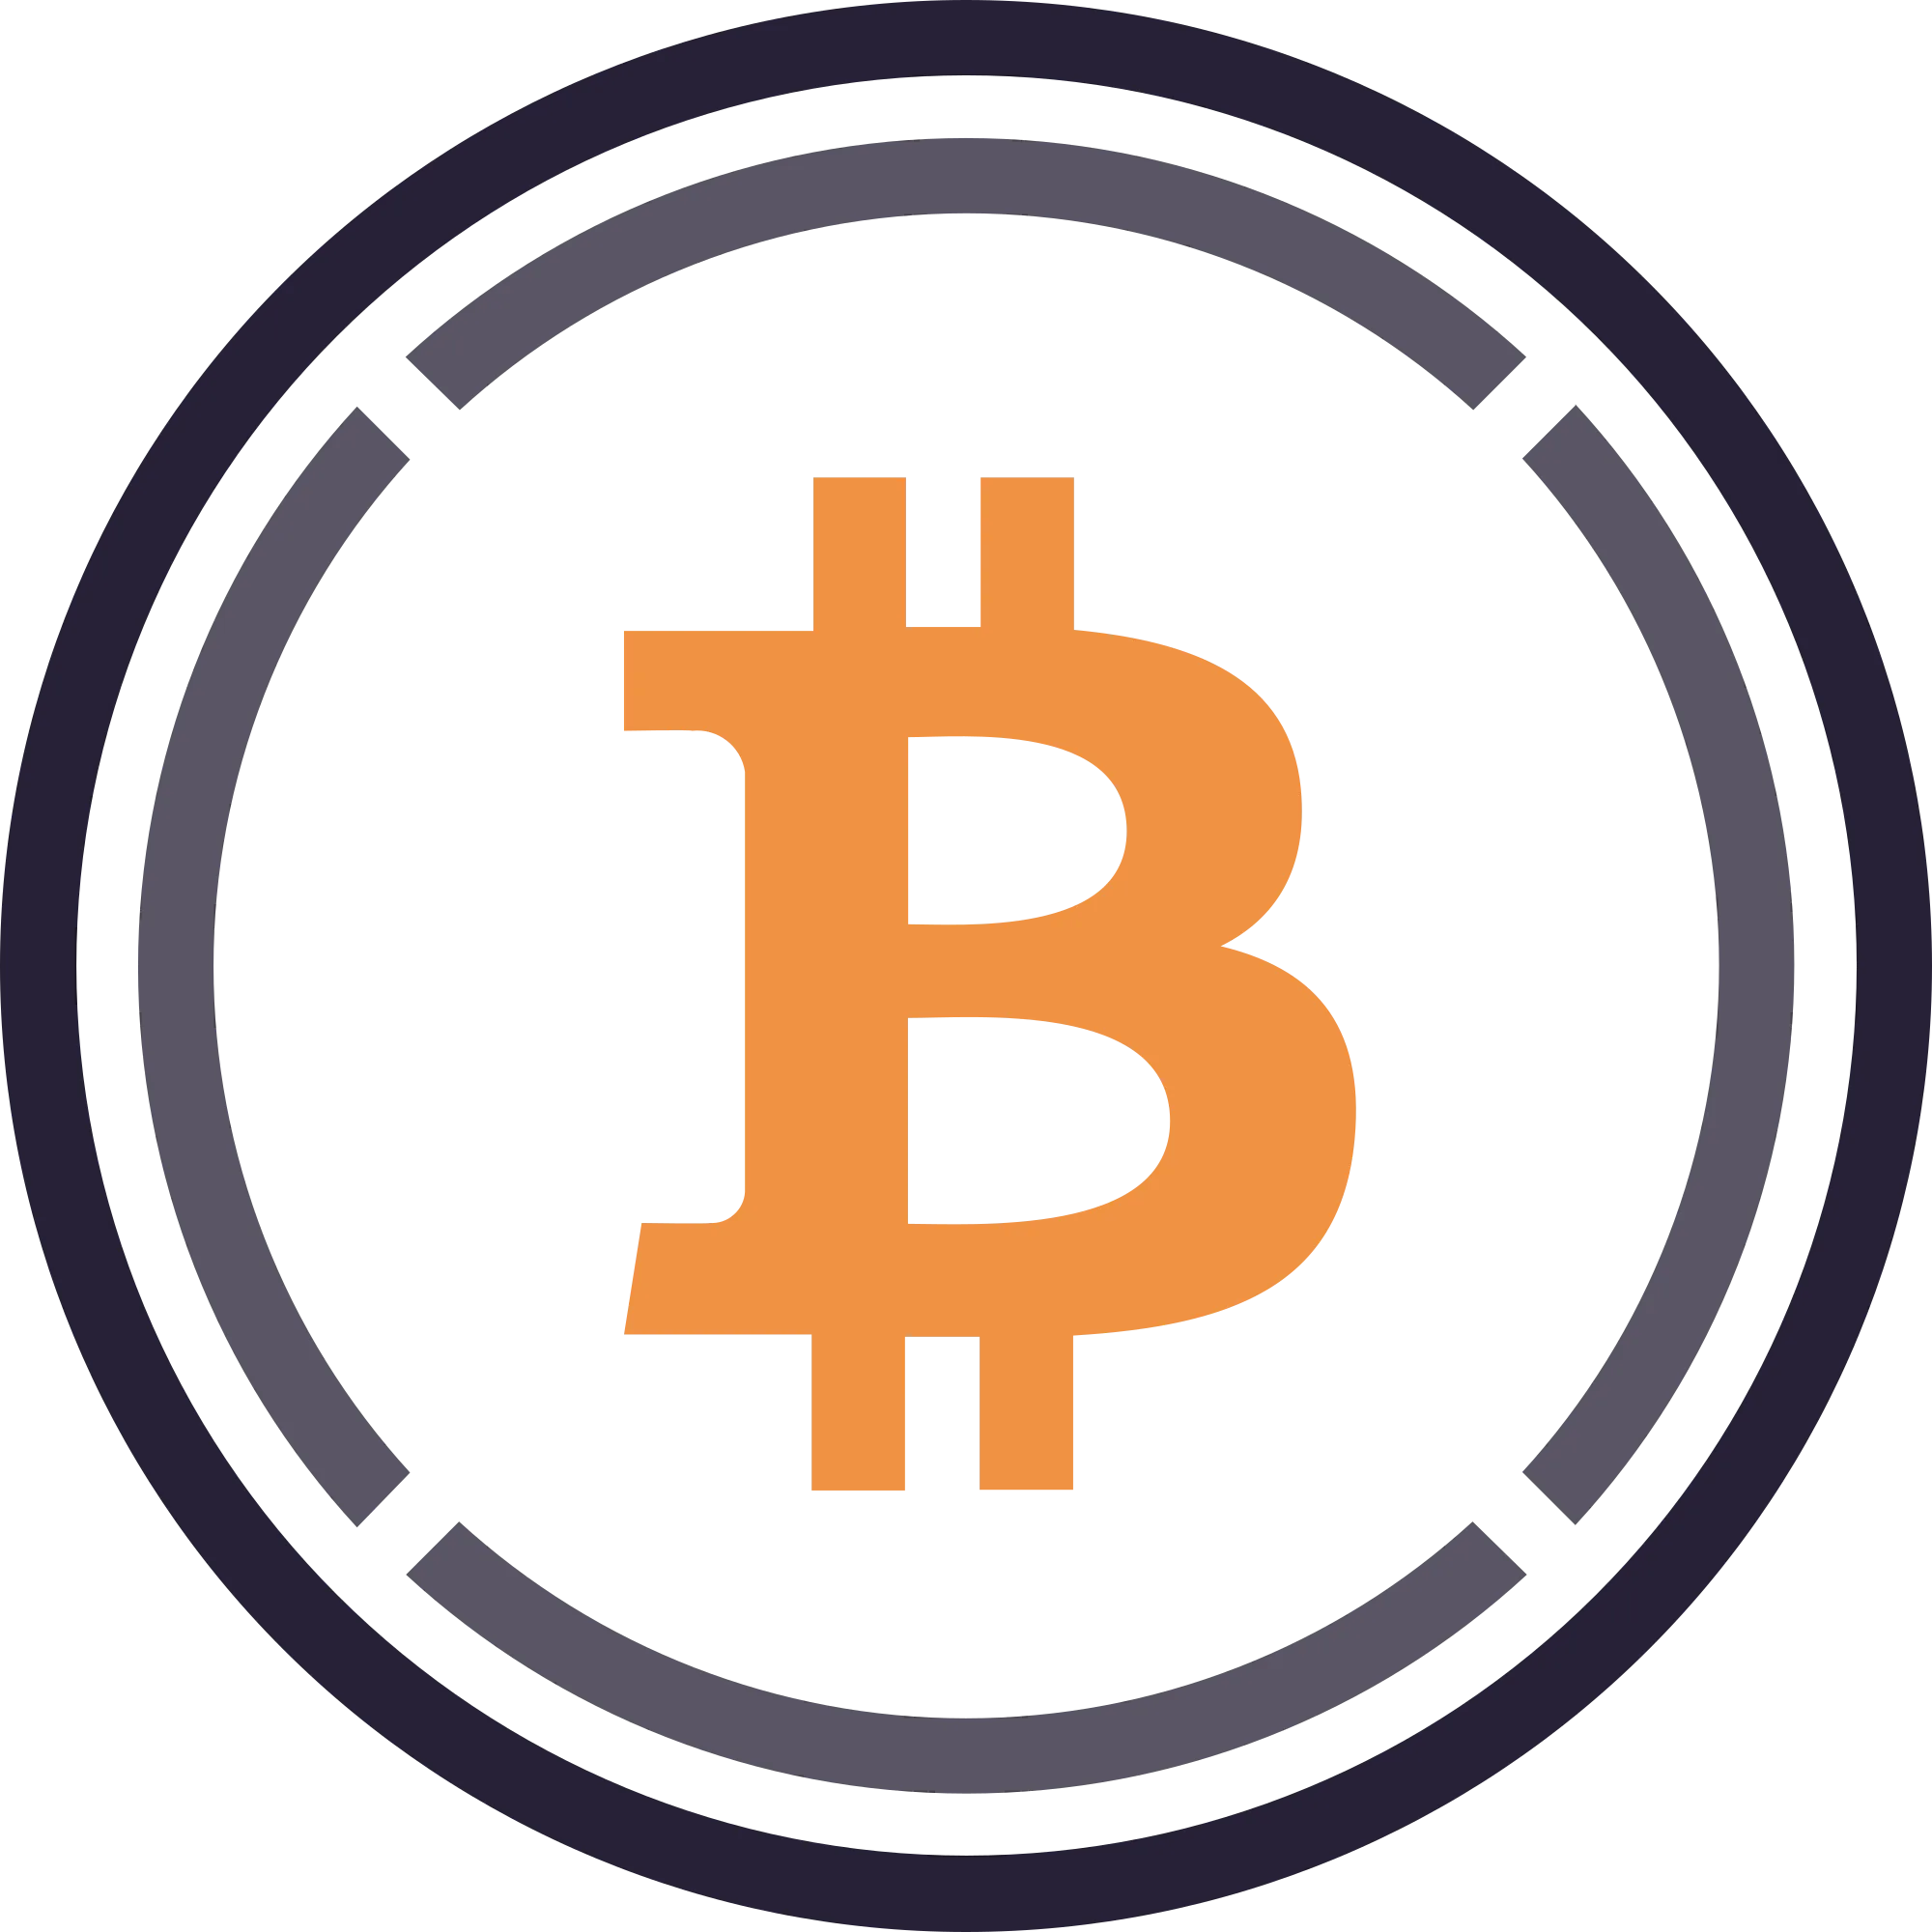 Wrapped Bitcoin (WBTC) logo